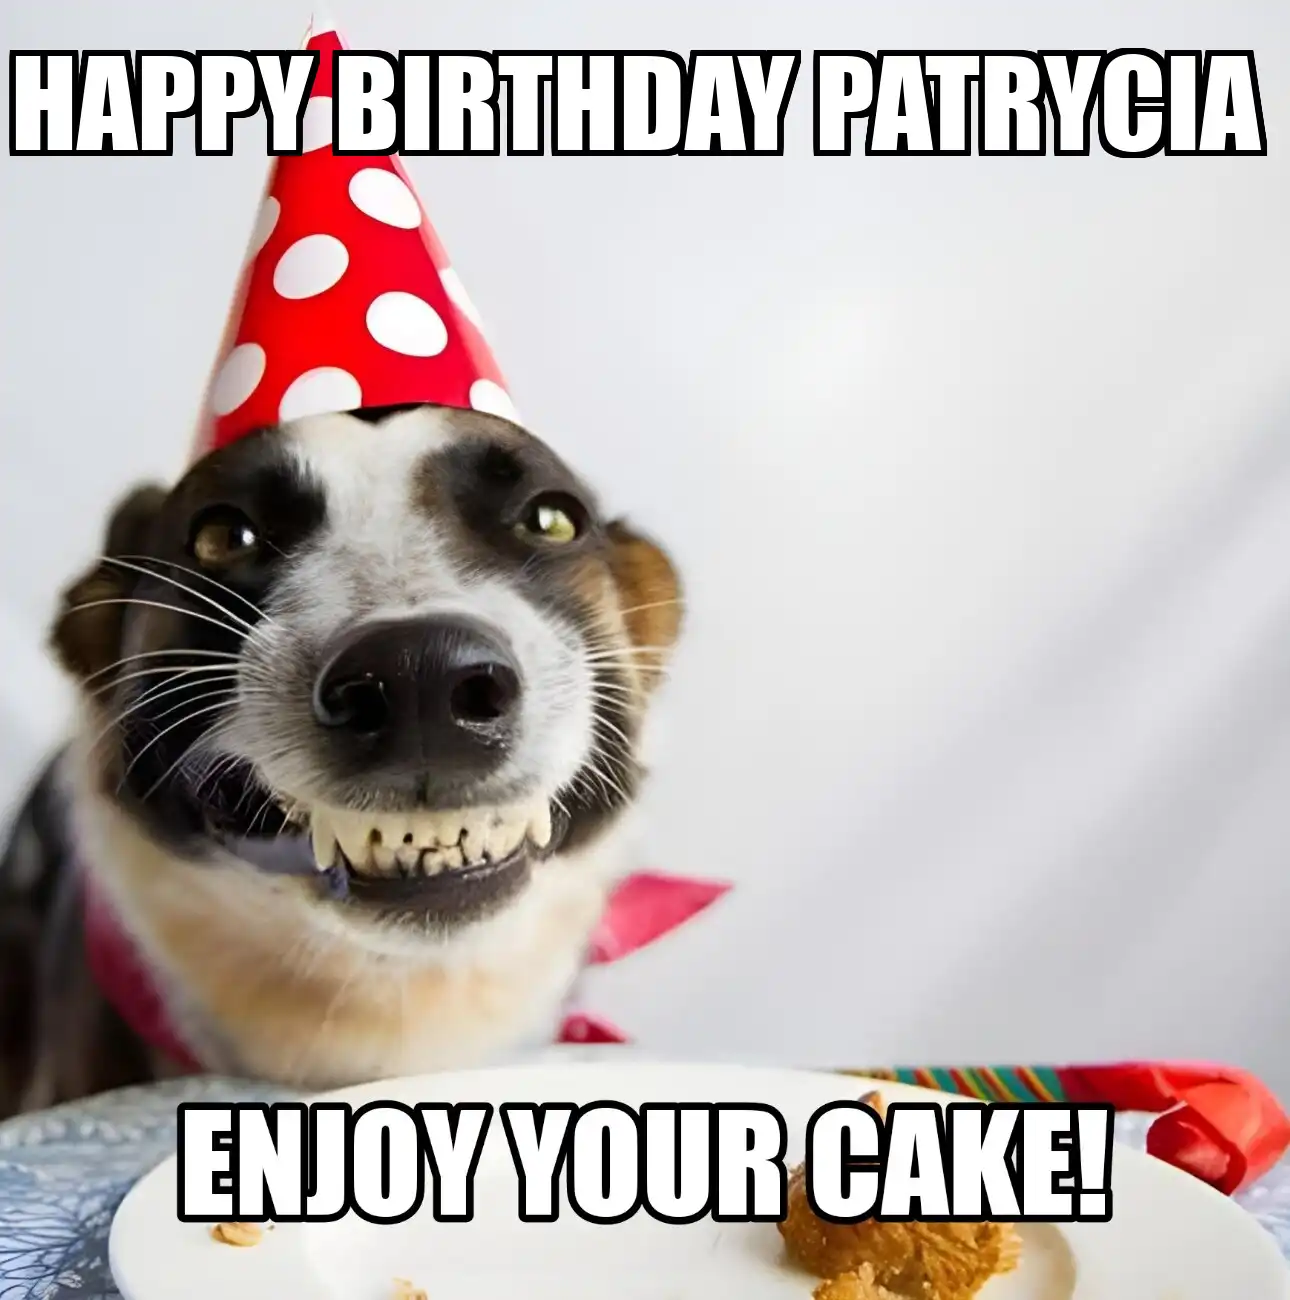 Happy Birthday Patrycia Enjoy Your Cake Dog Meme